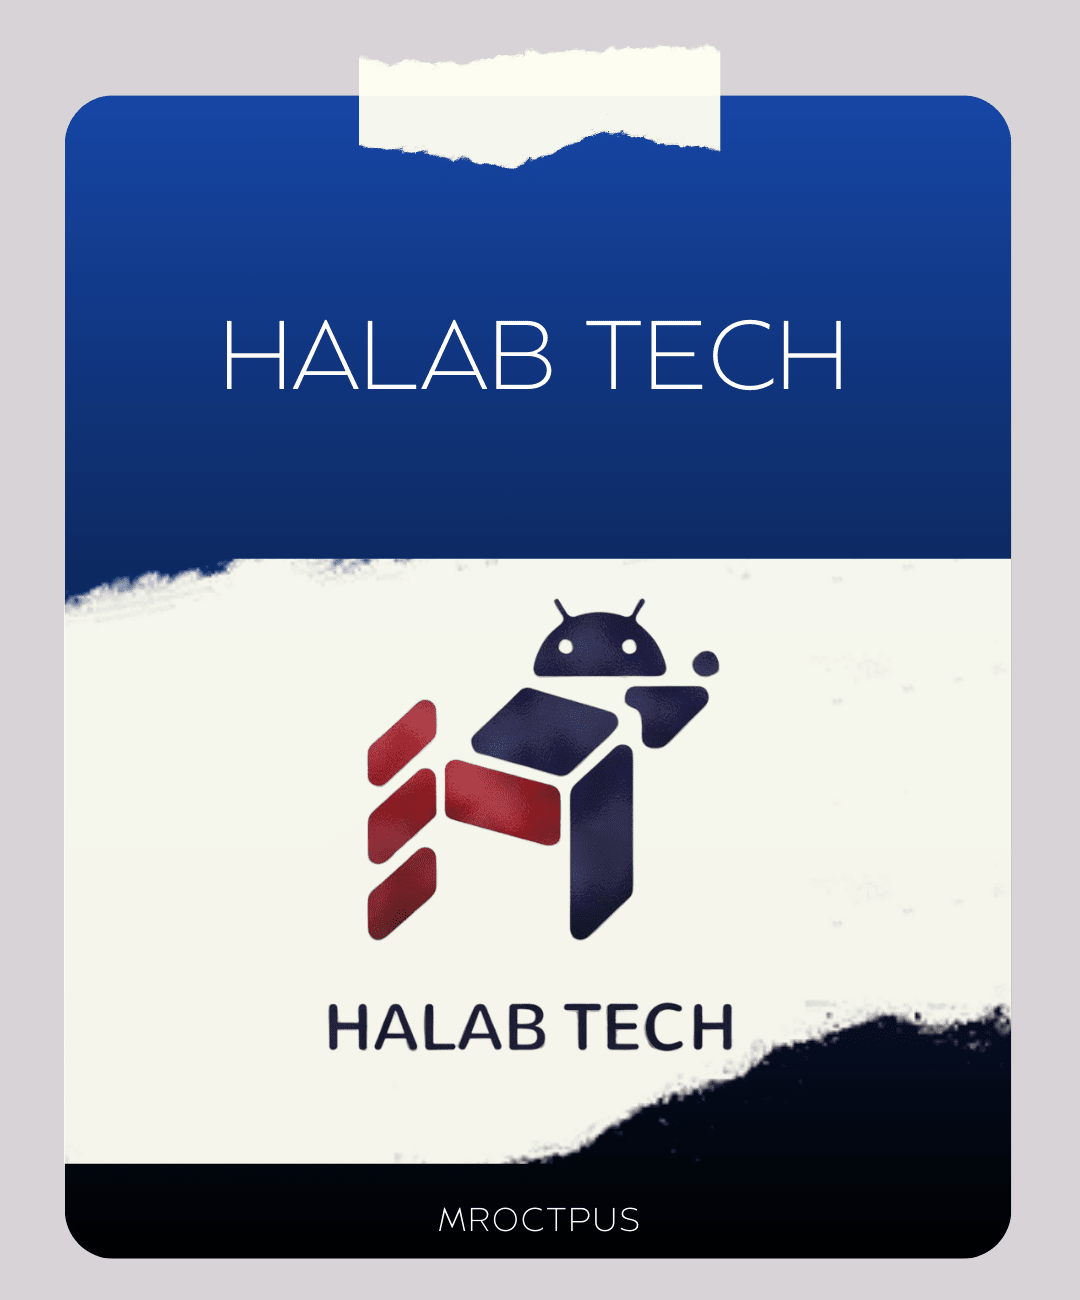 اکانت و فعالسازی اشتراک سایت halabtech